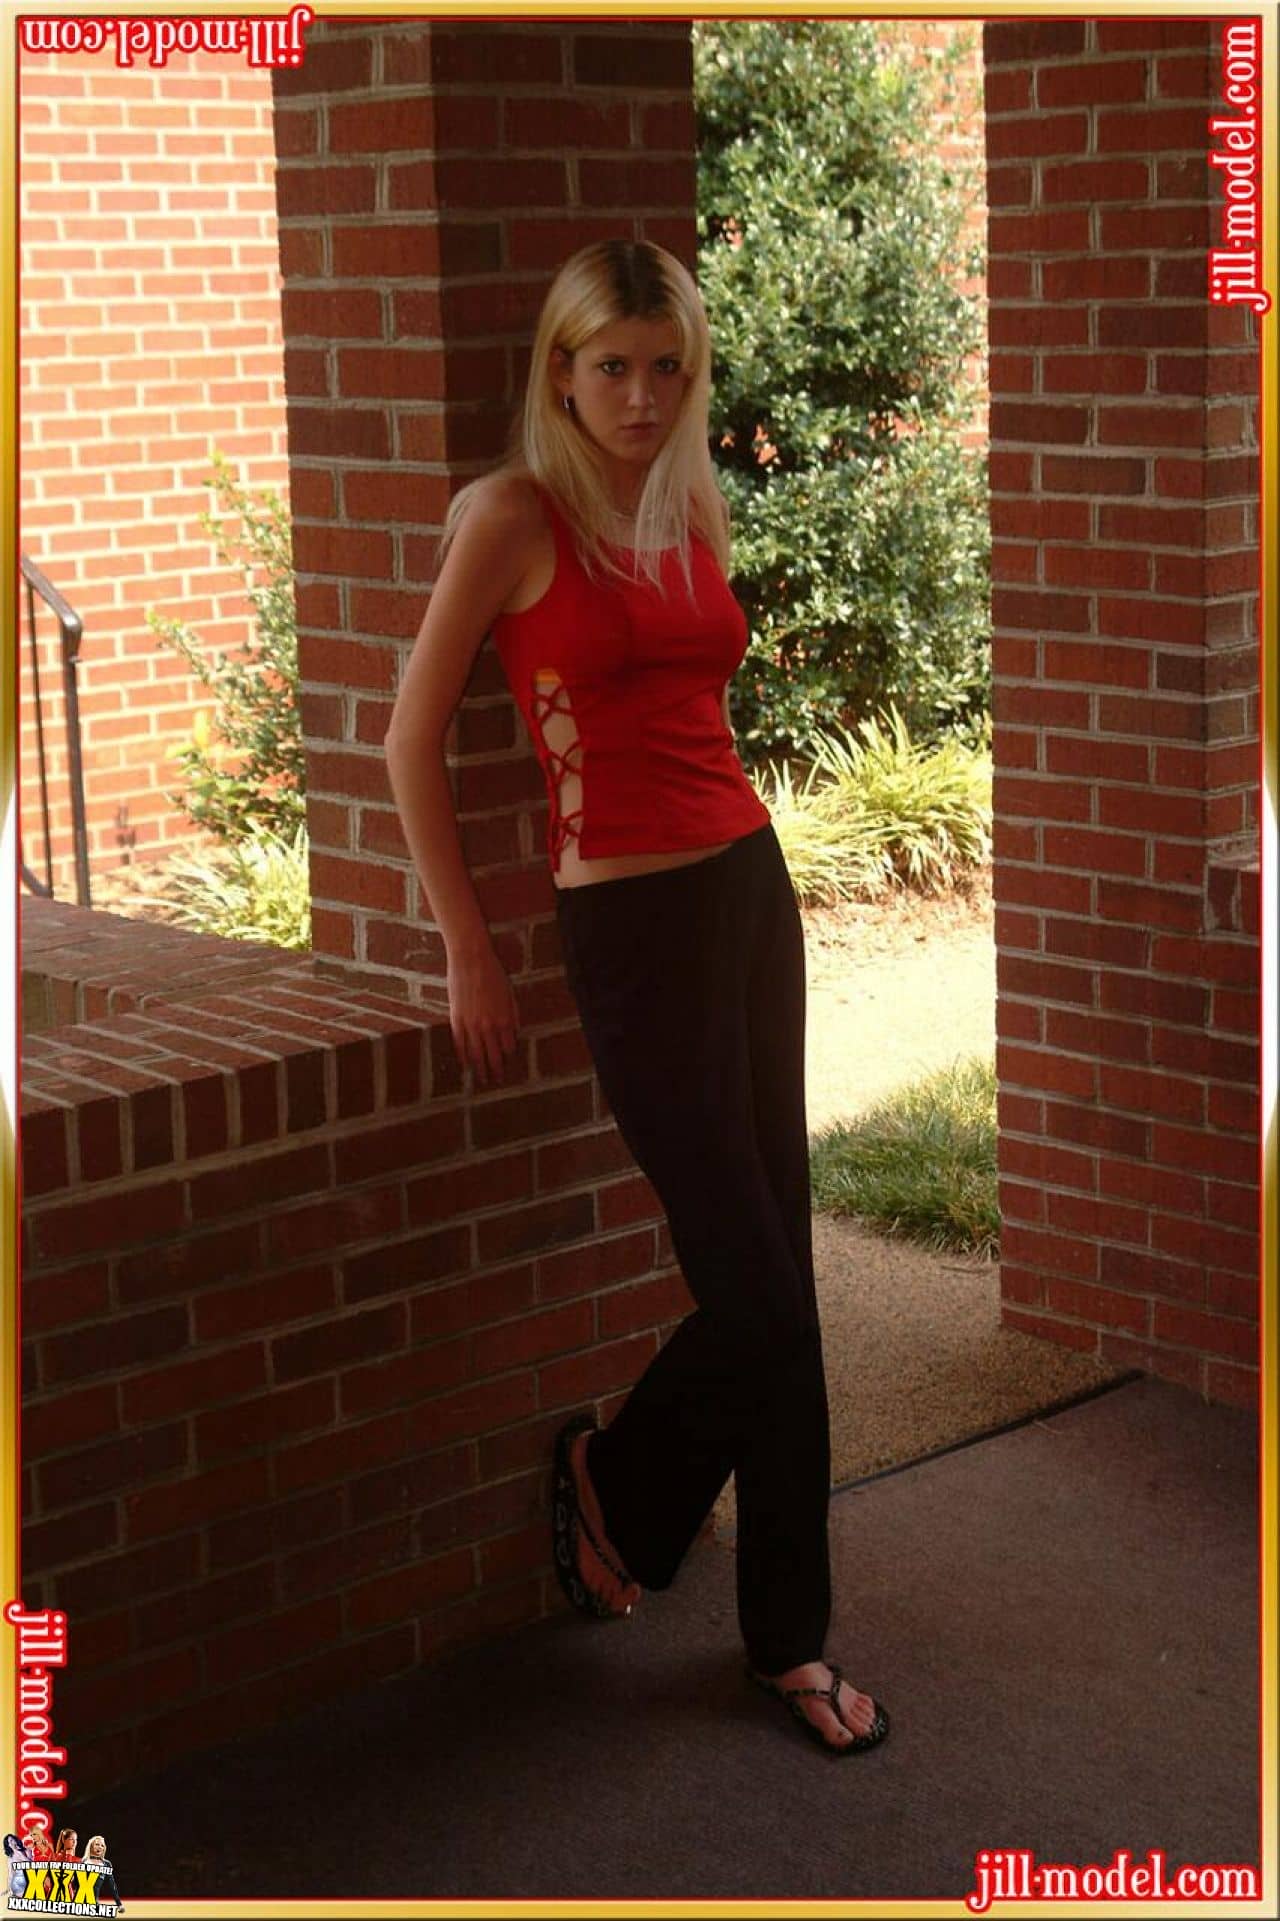 Jill Model Cute Teen Model Picture Sets Siterip Download